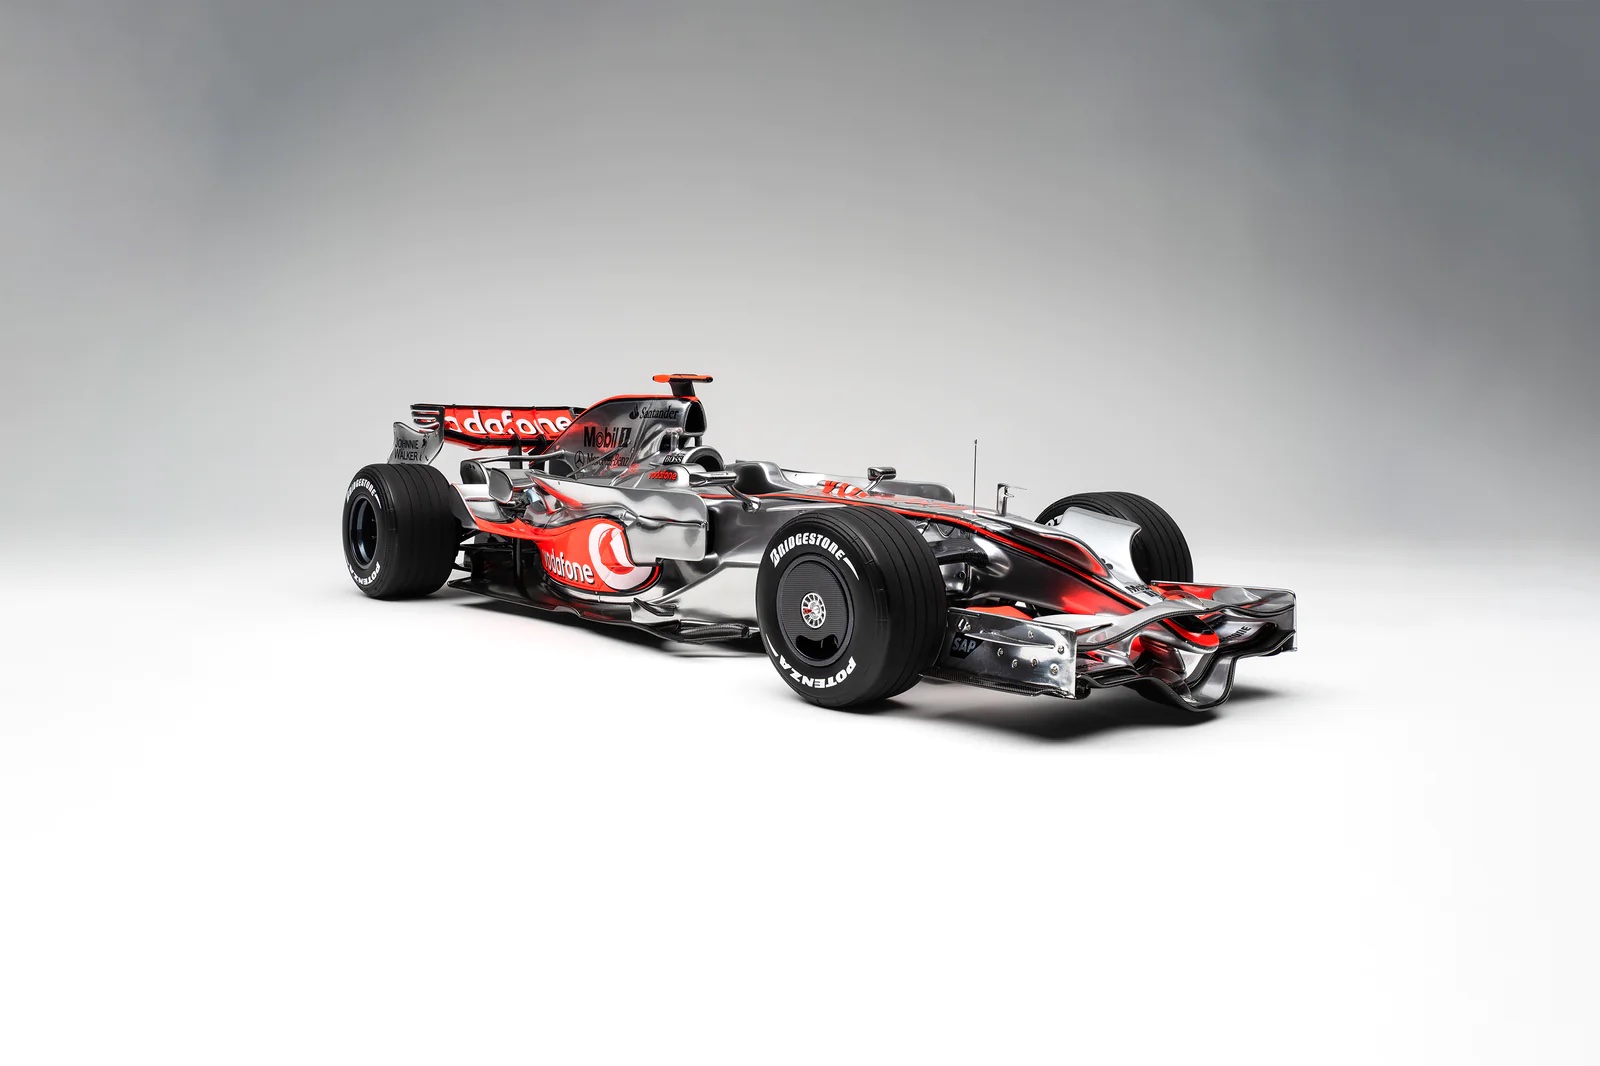 Pato O’Ward Drives Lewis Hamilton’s Championship-Winning McLaren F1 Car (video)